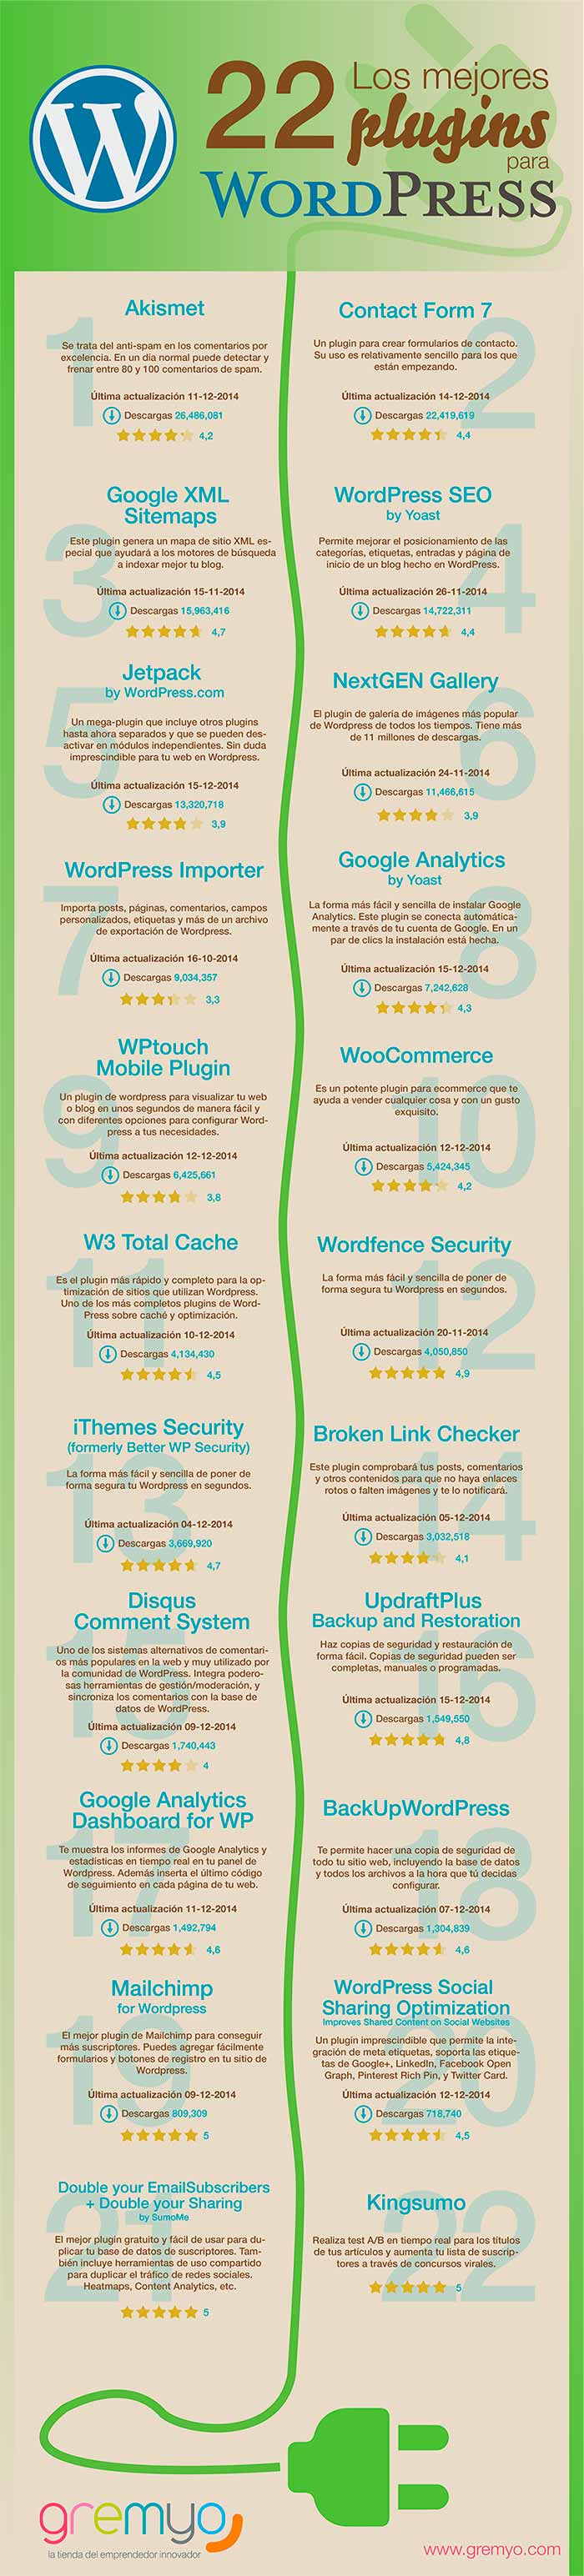 Infografia sobre los 22 mejores plugins para WordPress